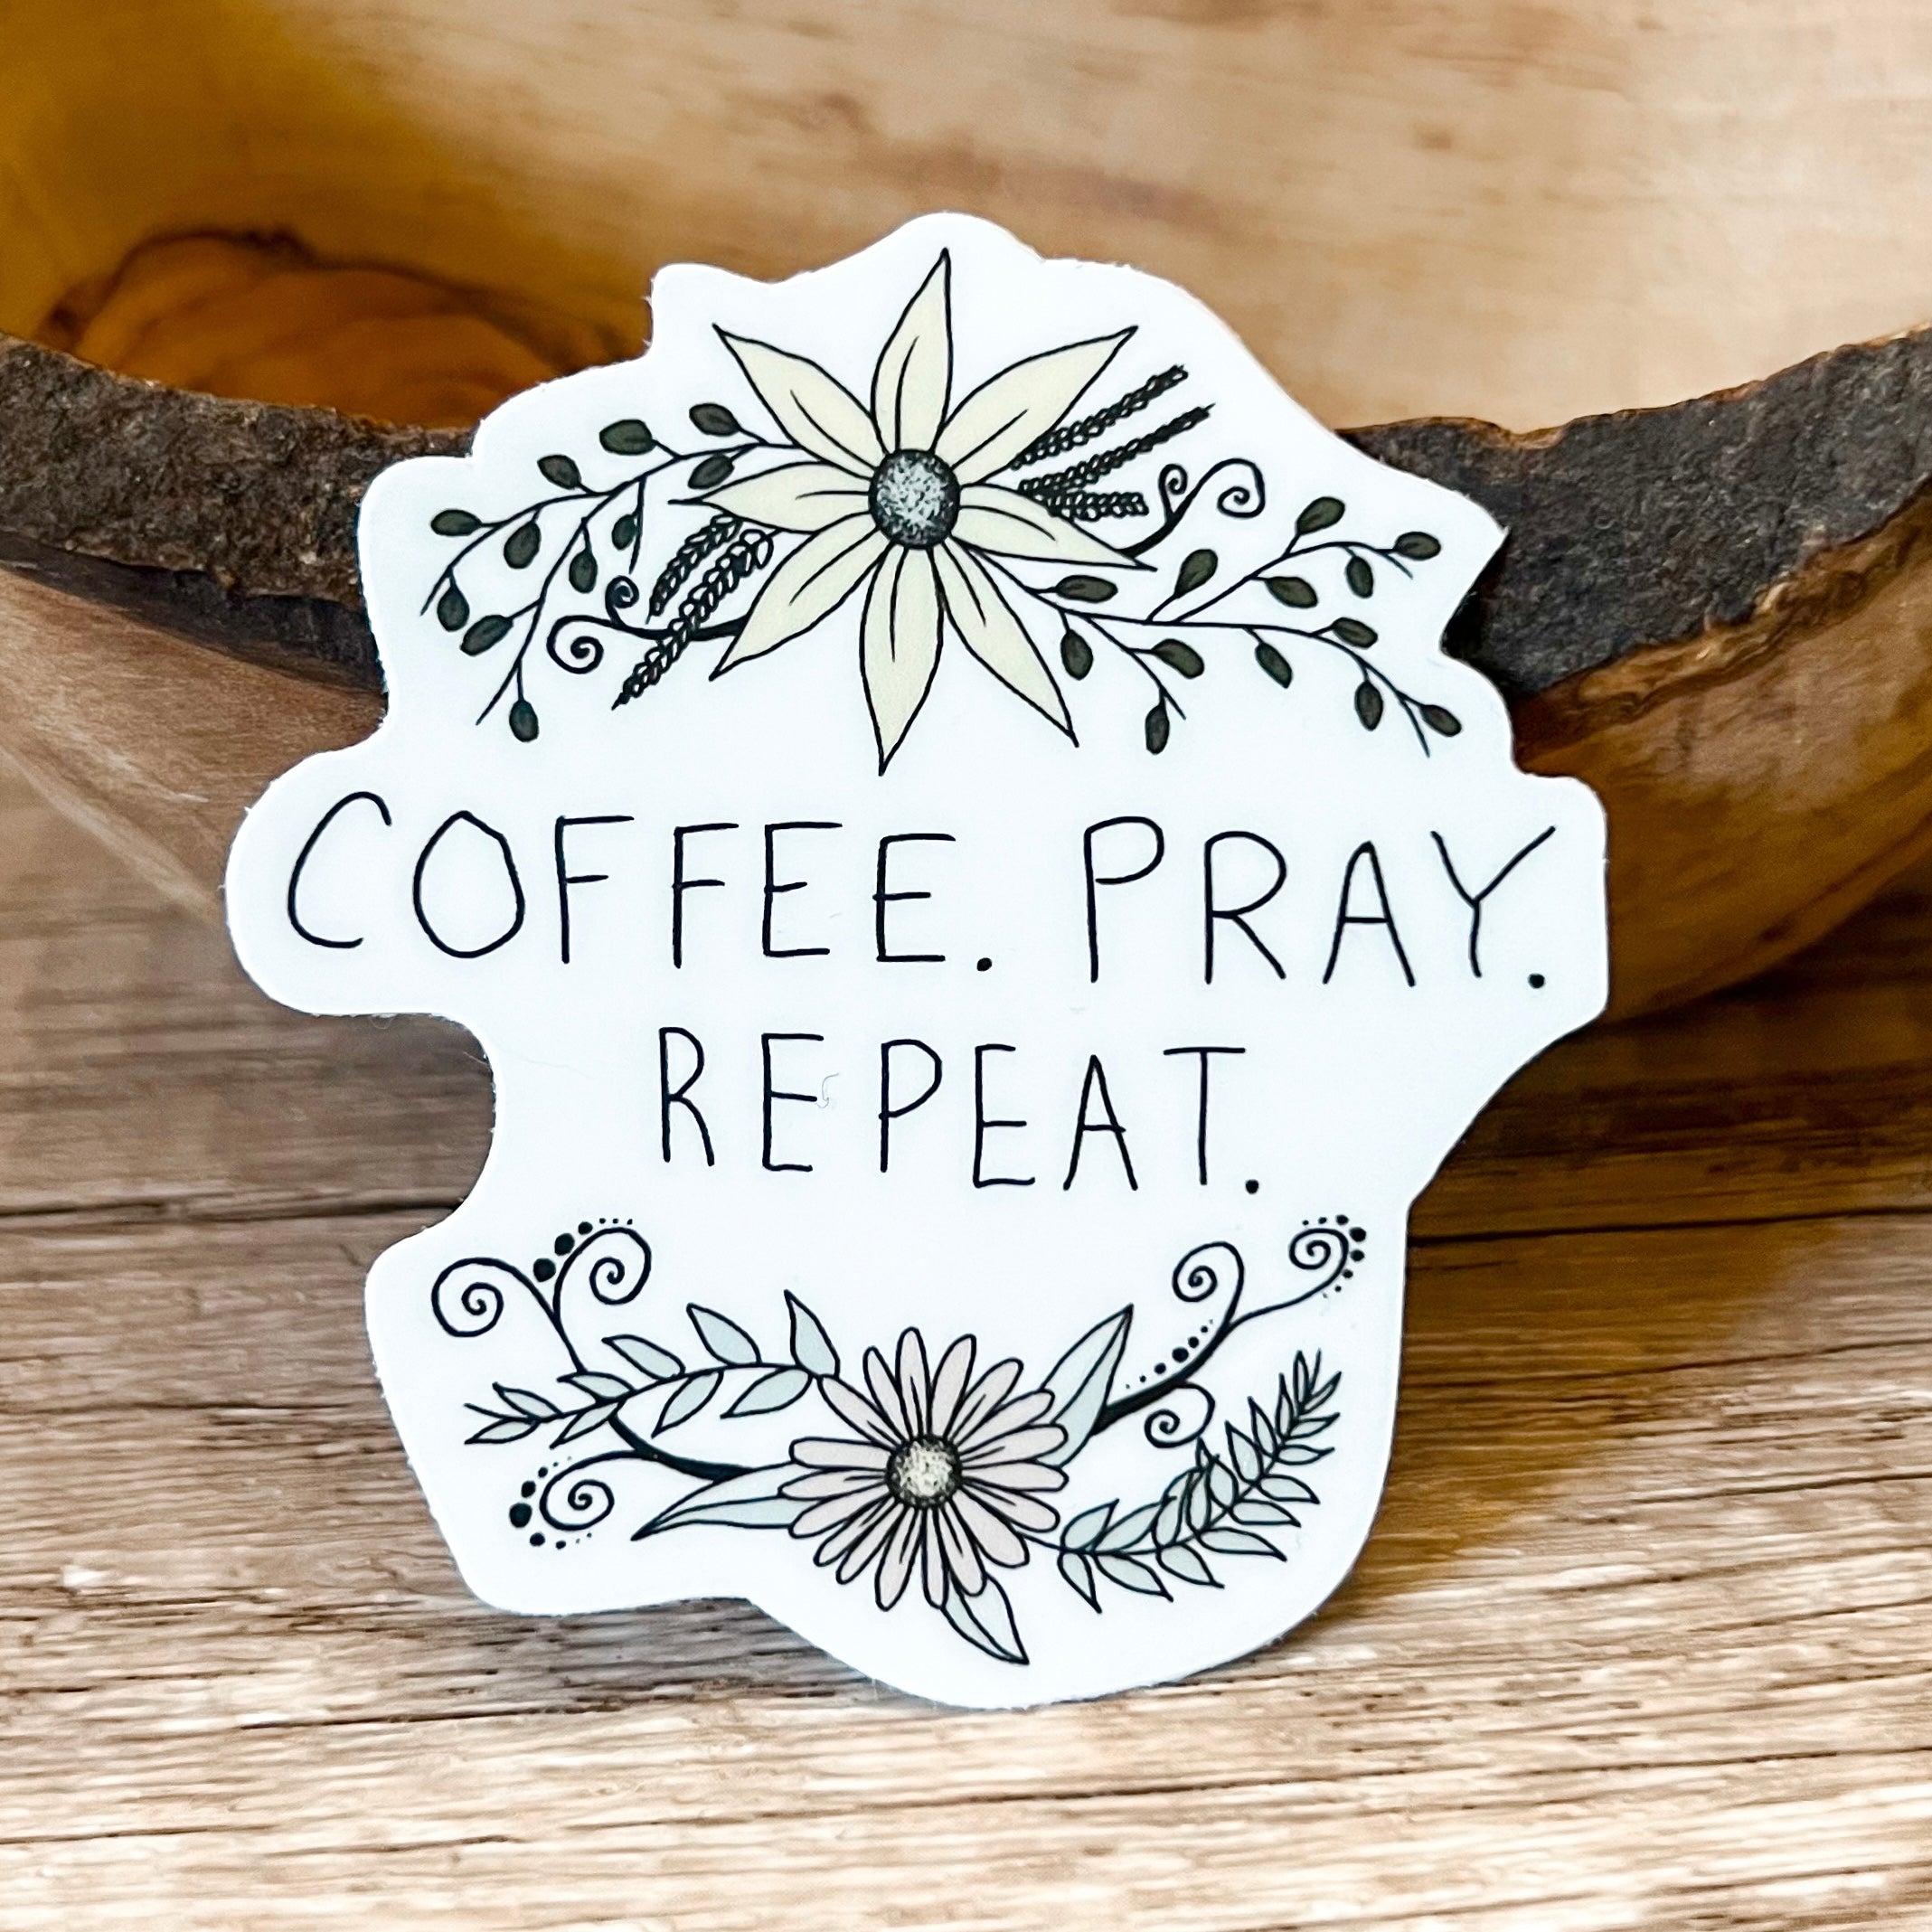 Coffee Pray Repeat Vinyl Sticker